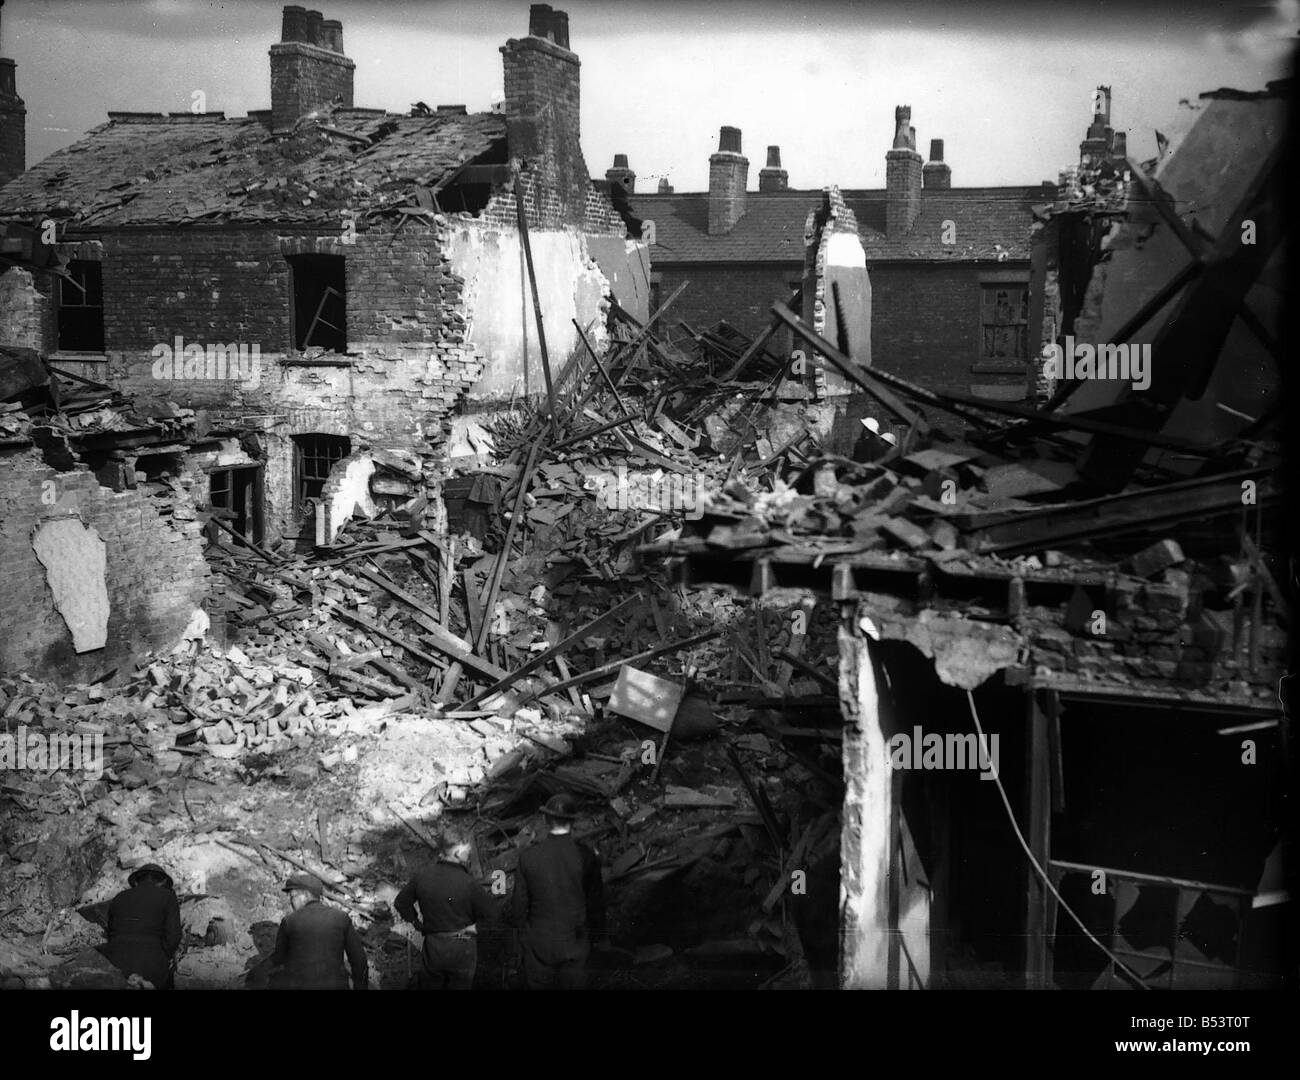 WW II Air Raid Damage Bomb Damage at Merseyside Dm JB OP 220 f Stock Photo